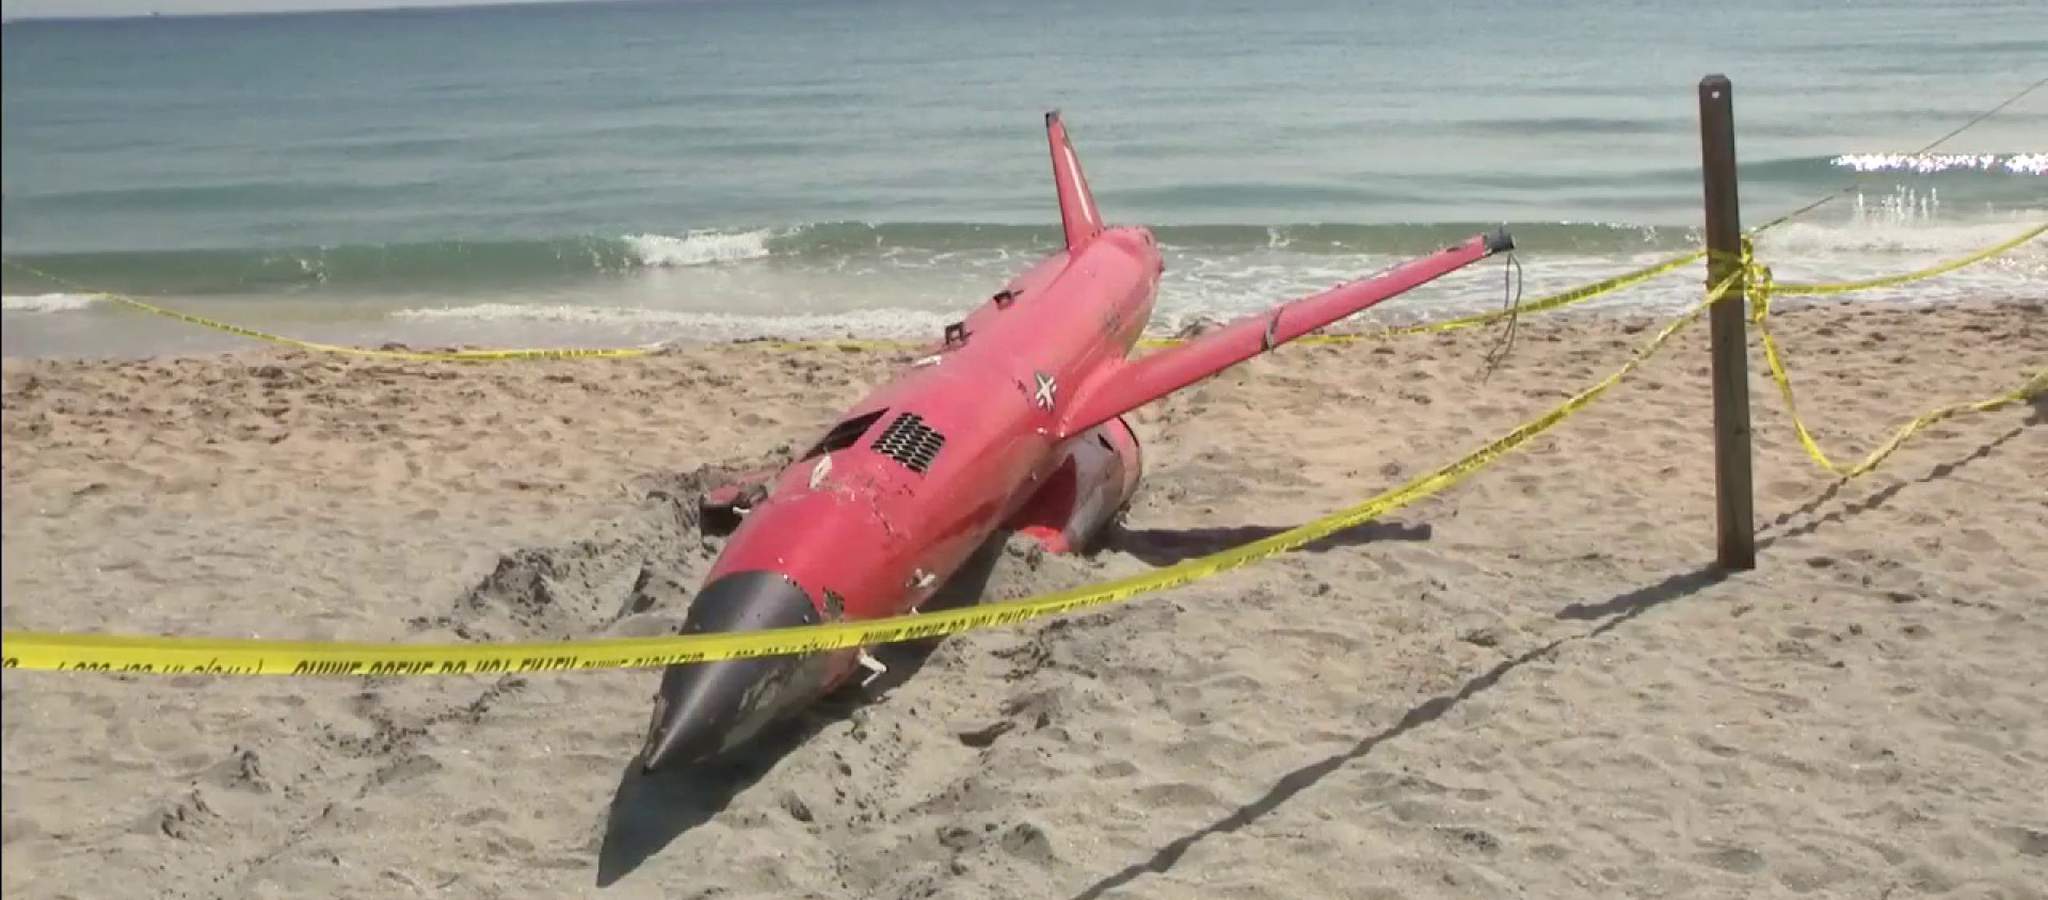 US Air Force drone washes ashore on Boynton Beach